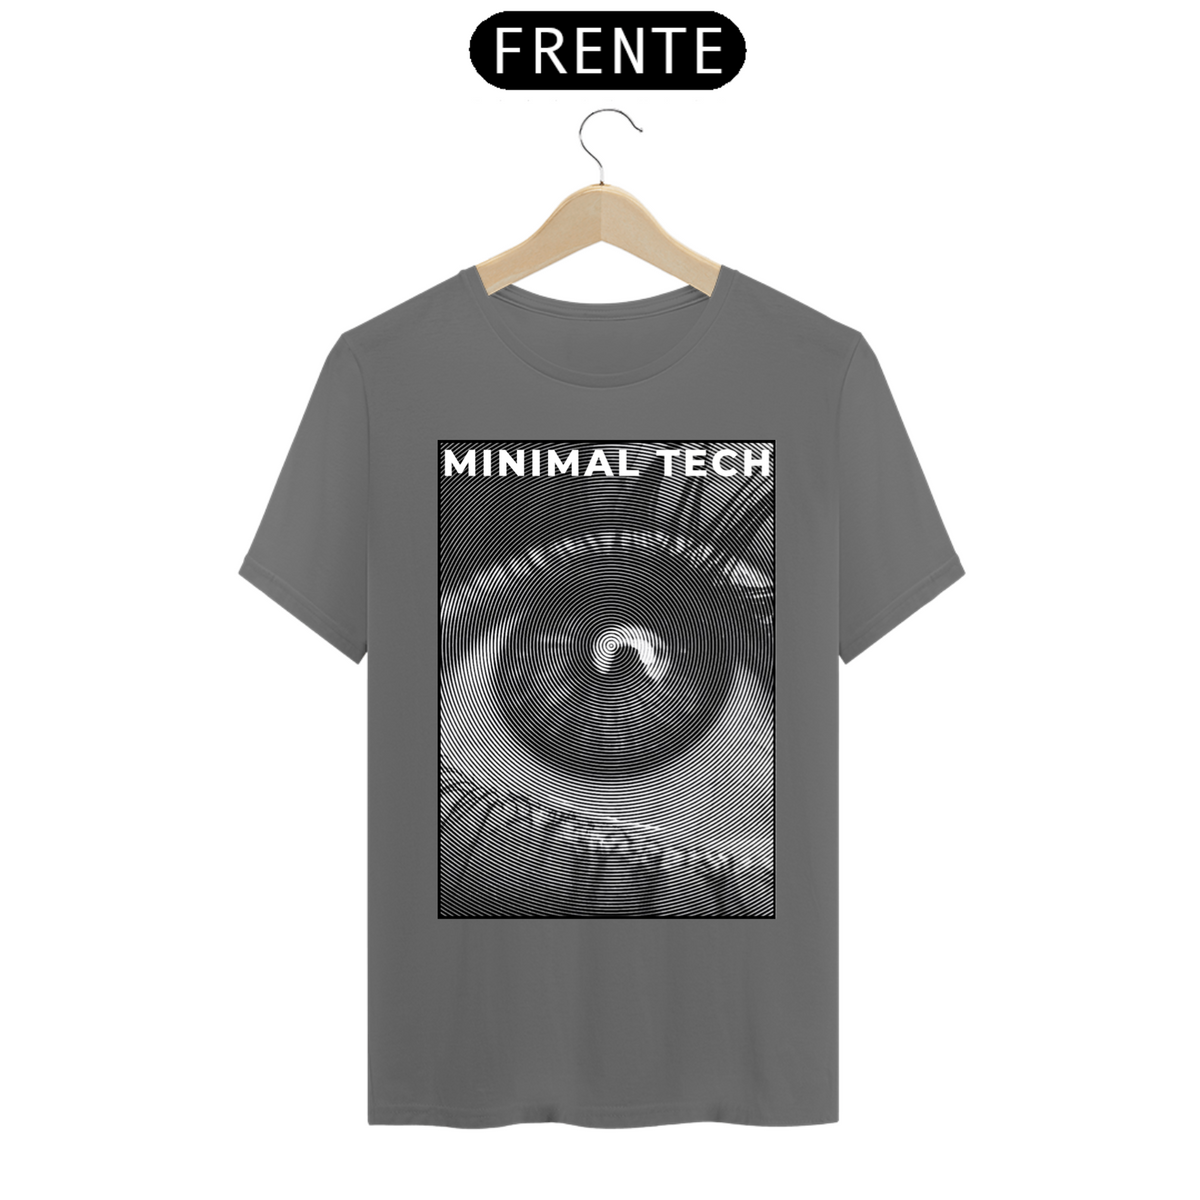 Nome do produto: MINIMAL TECH - t-shirt estonada